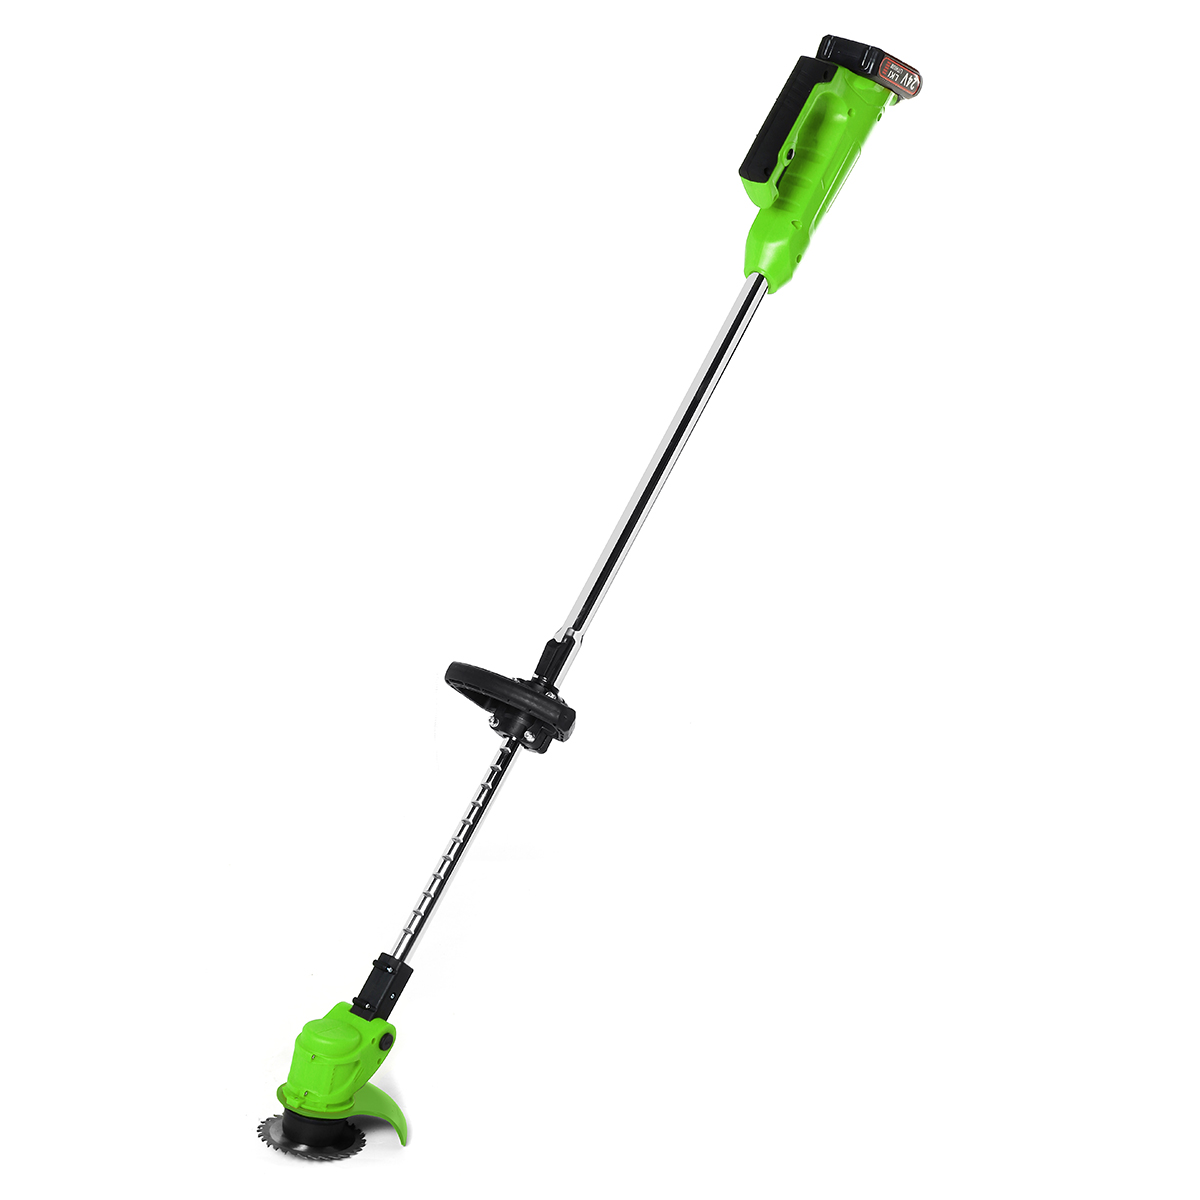 12V/24V Electric Lawn Mower Cordless Grass Trimmer Adjustable Lawn Mower Pruning Cutter Garden Tool+2000mAh 2Pcs Li-ion Battery